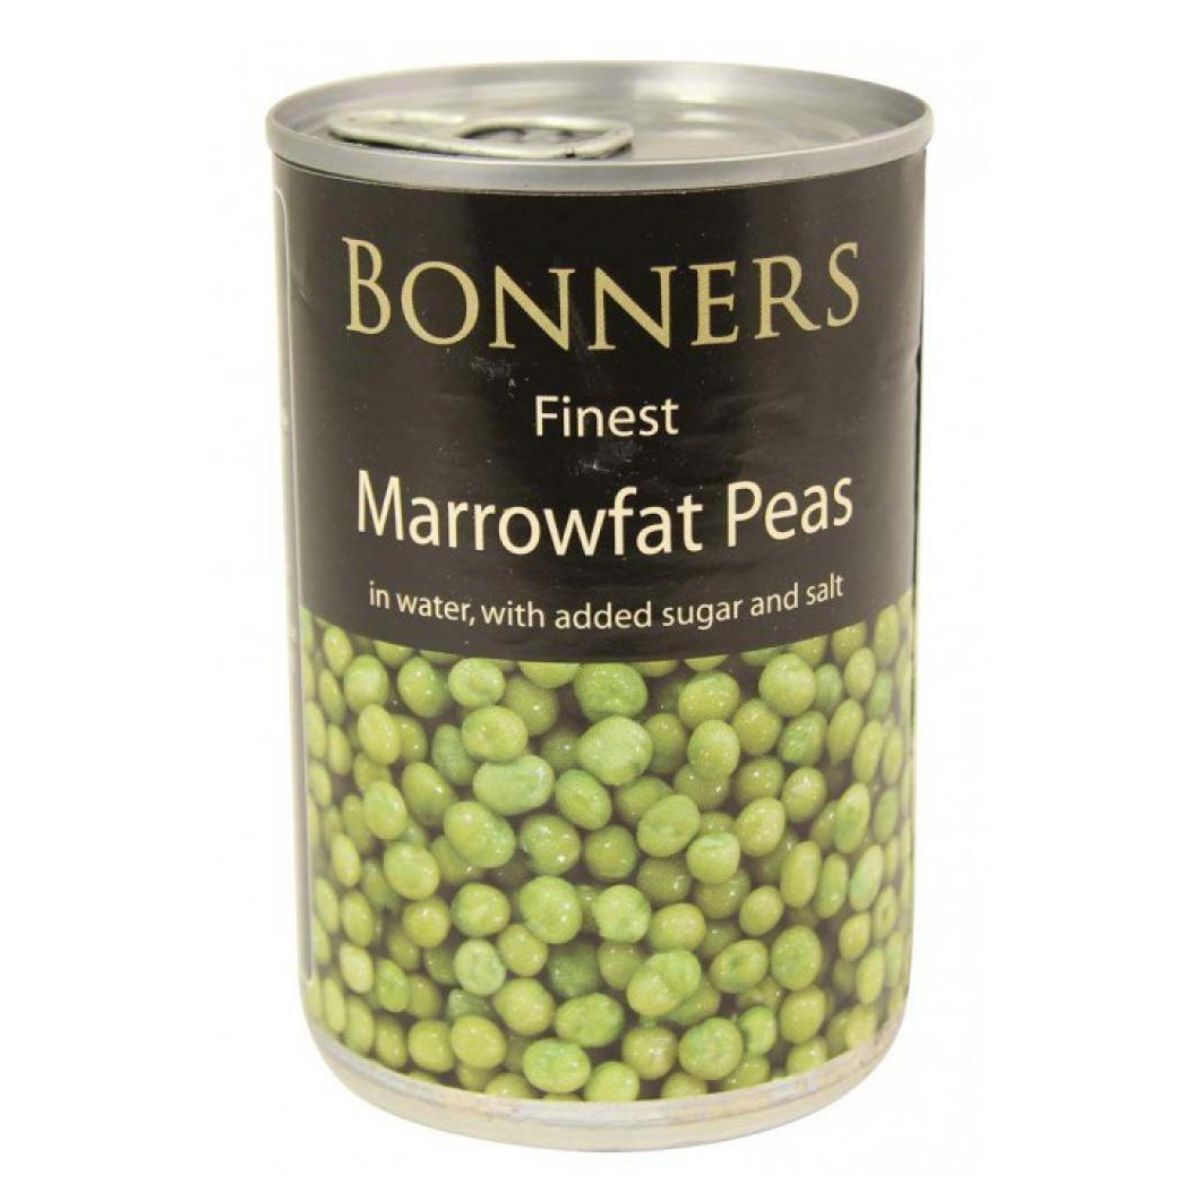 Bonners - Finest Marrowfat Peas - 300g